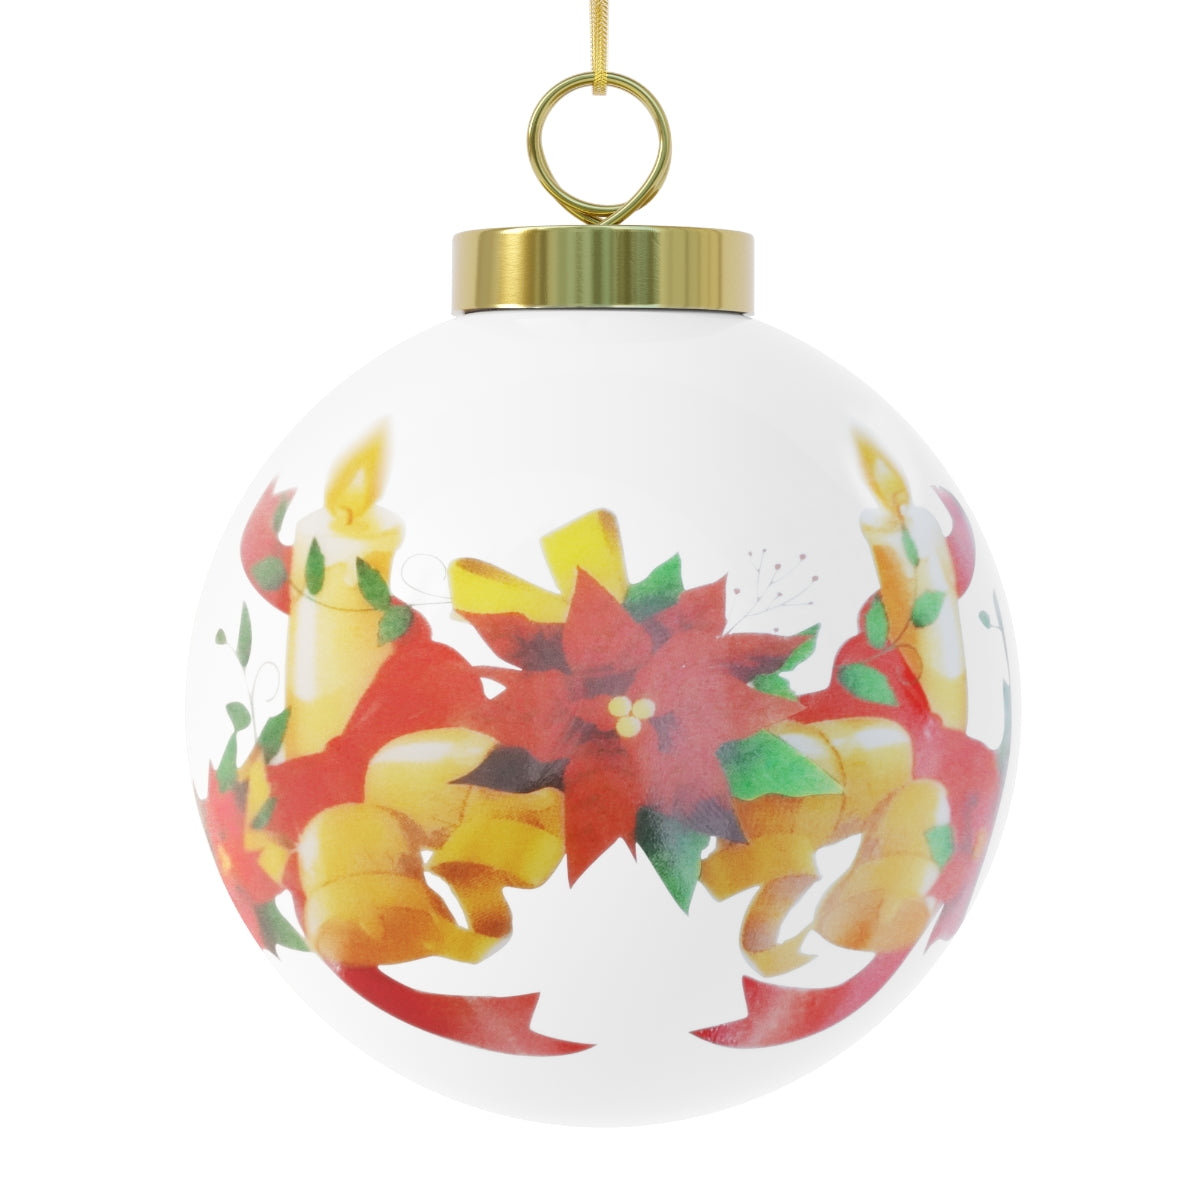 Make It A Giant Christmas Ball Ornament